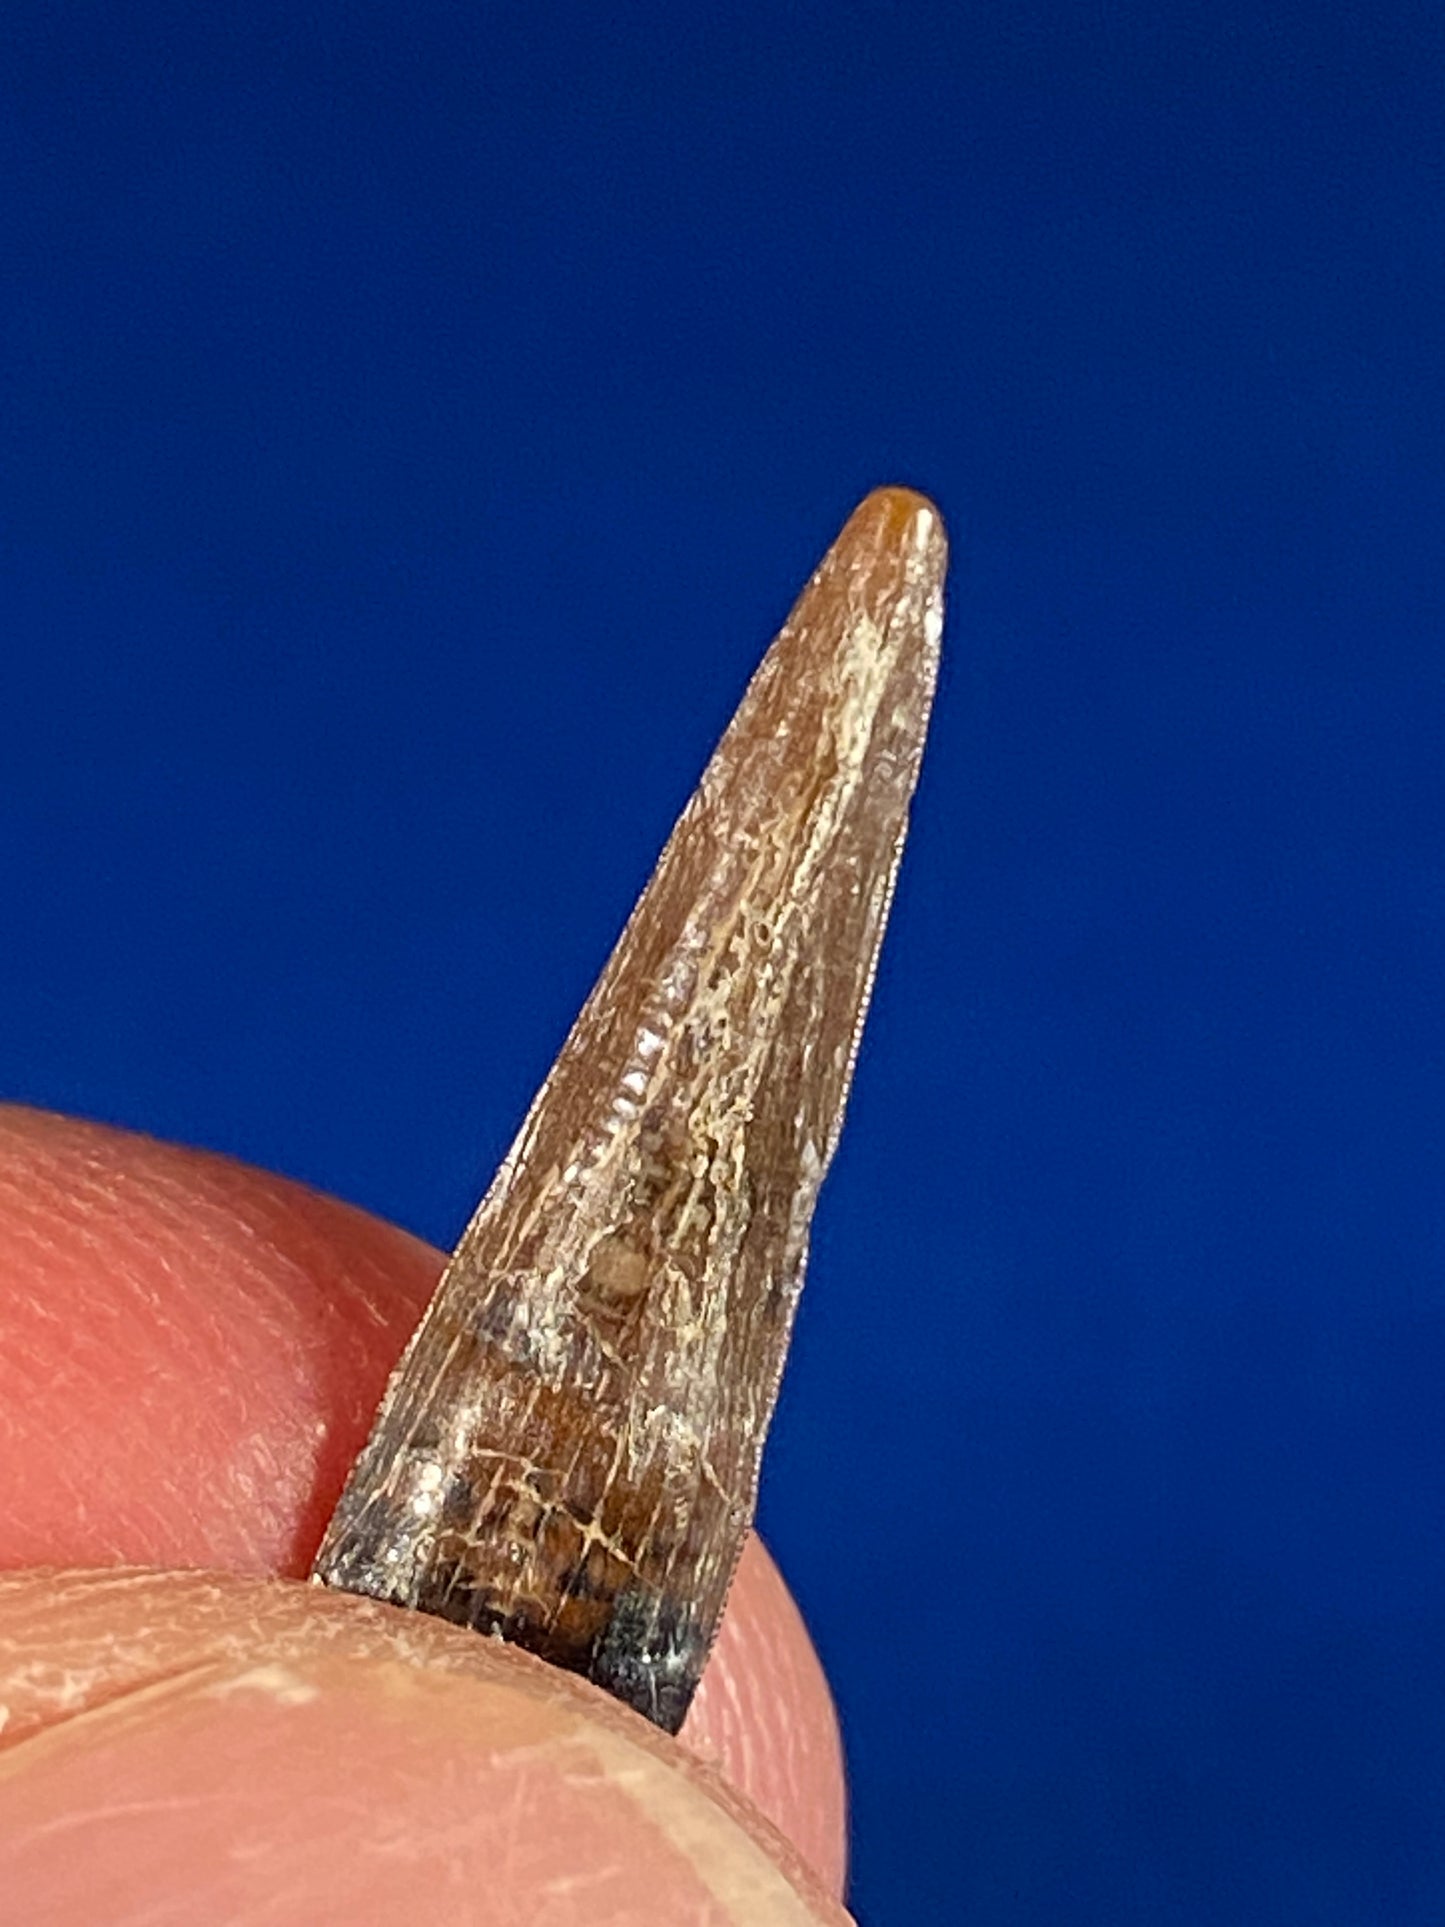 Richardoestesia tooth (3/4"), Hell Creek Formation, Garfield County, Montana